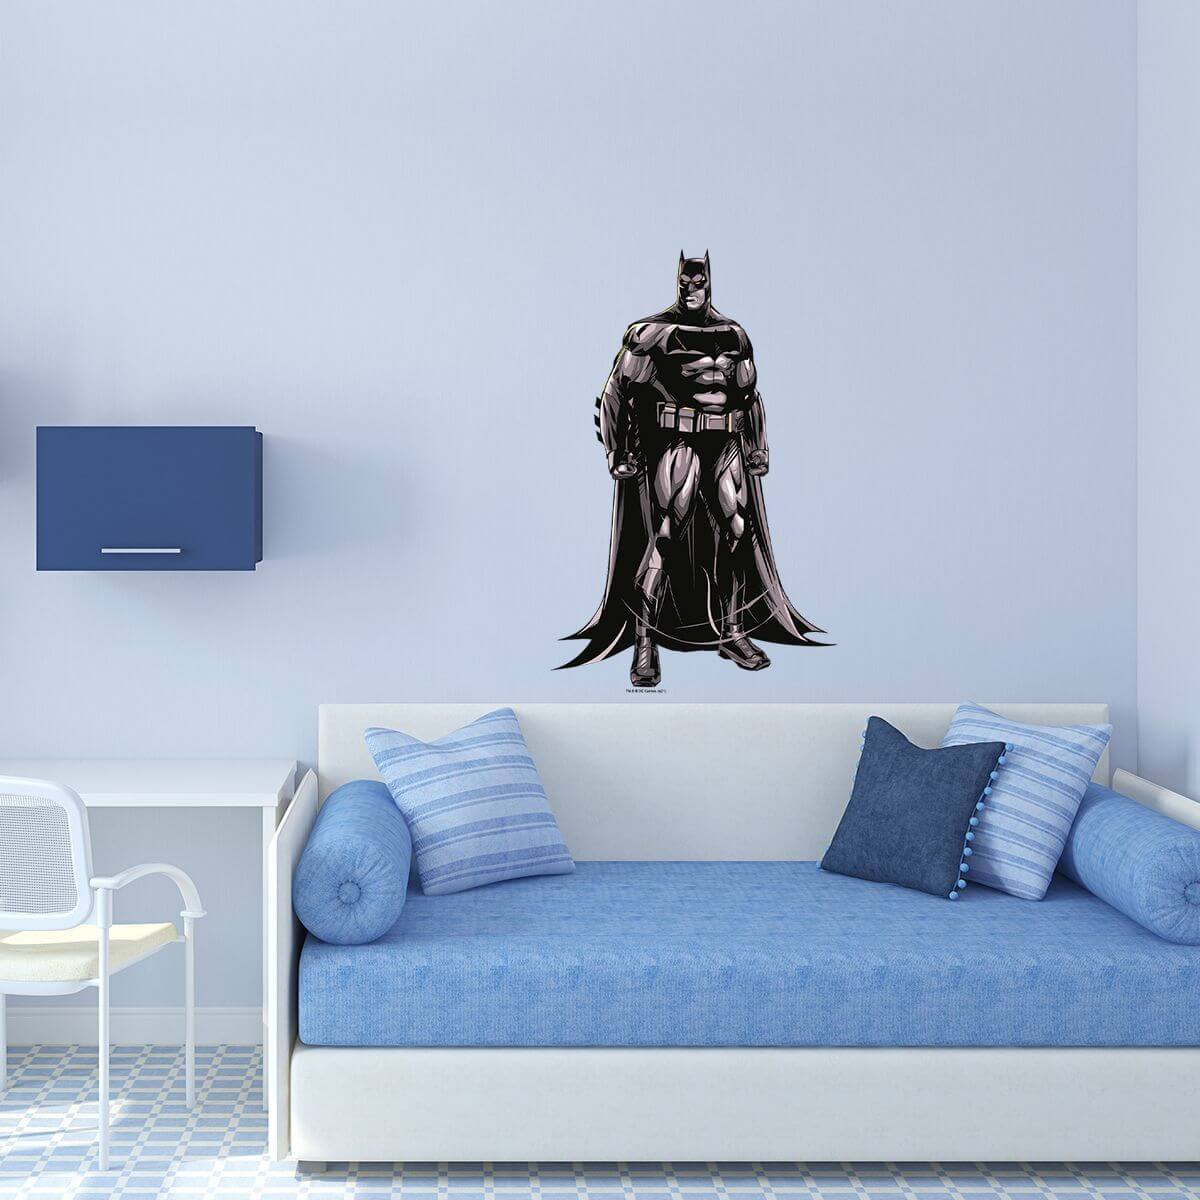 Kismet Decals Batman Battle Stance Licensed Wall Sticker - Easy DIY Justice League Home & Room Decor Wall Art - Kismet Decals